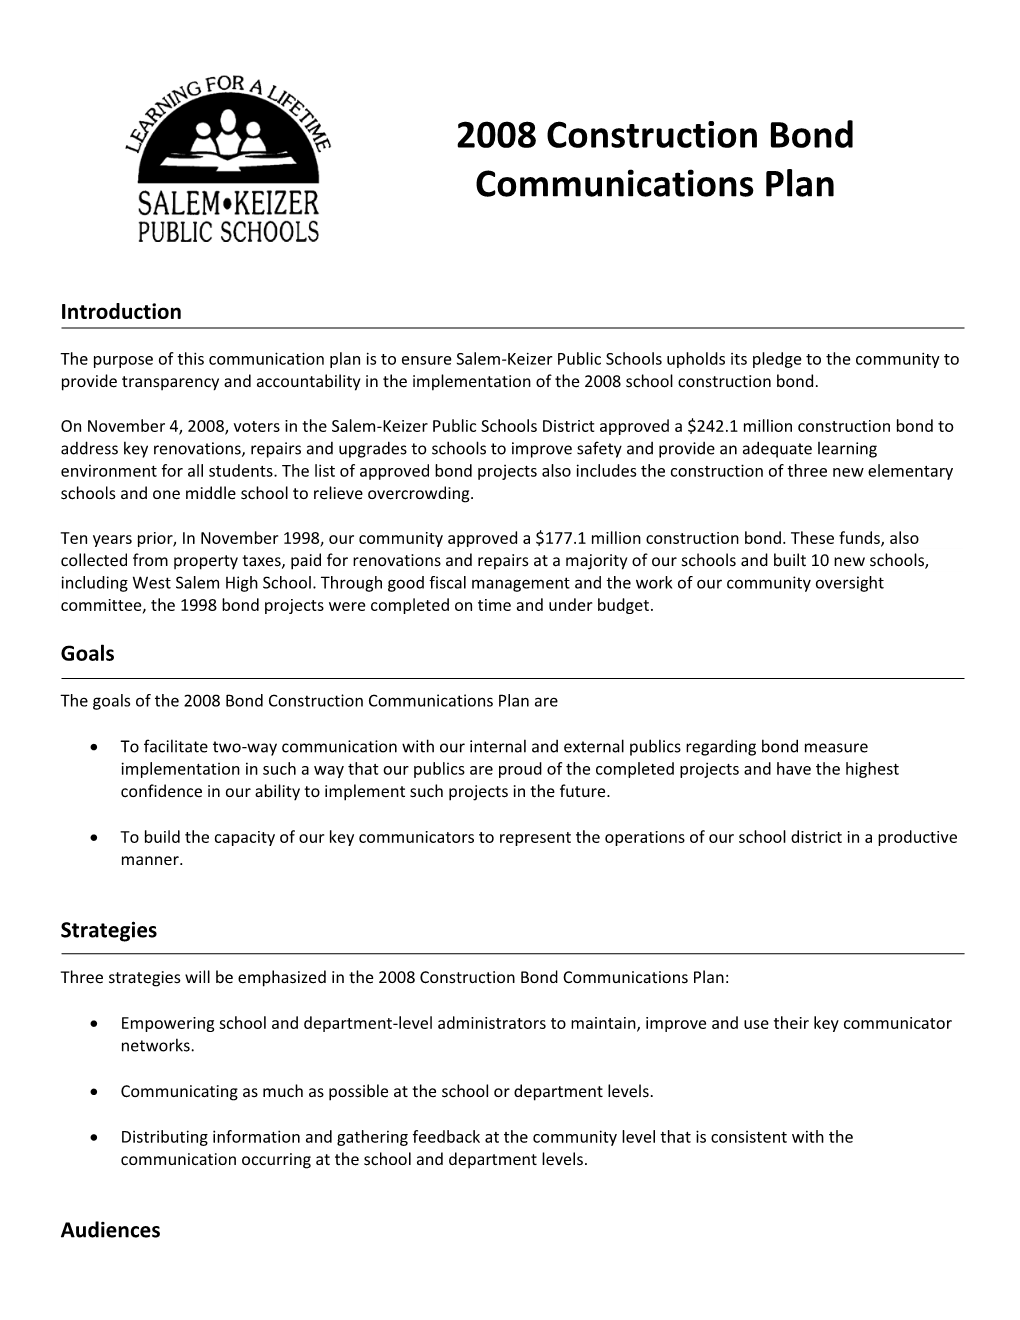 2008 Construction Bond Communications Plan